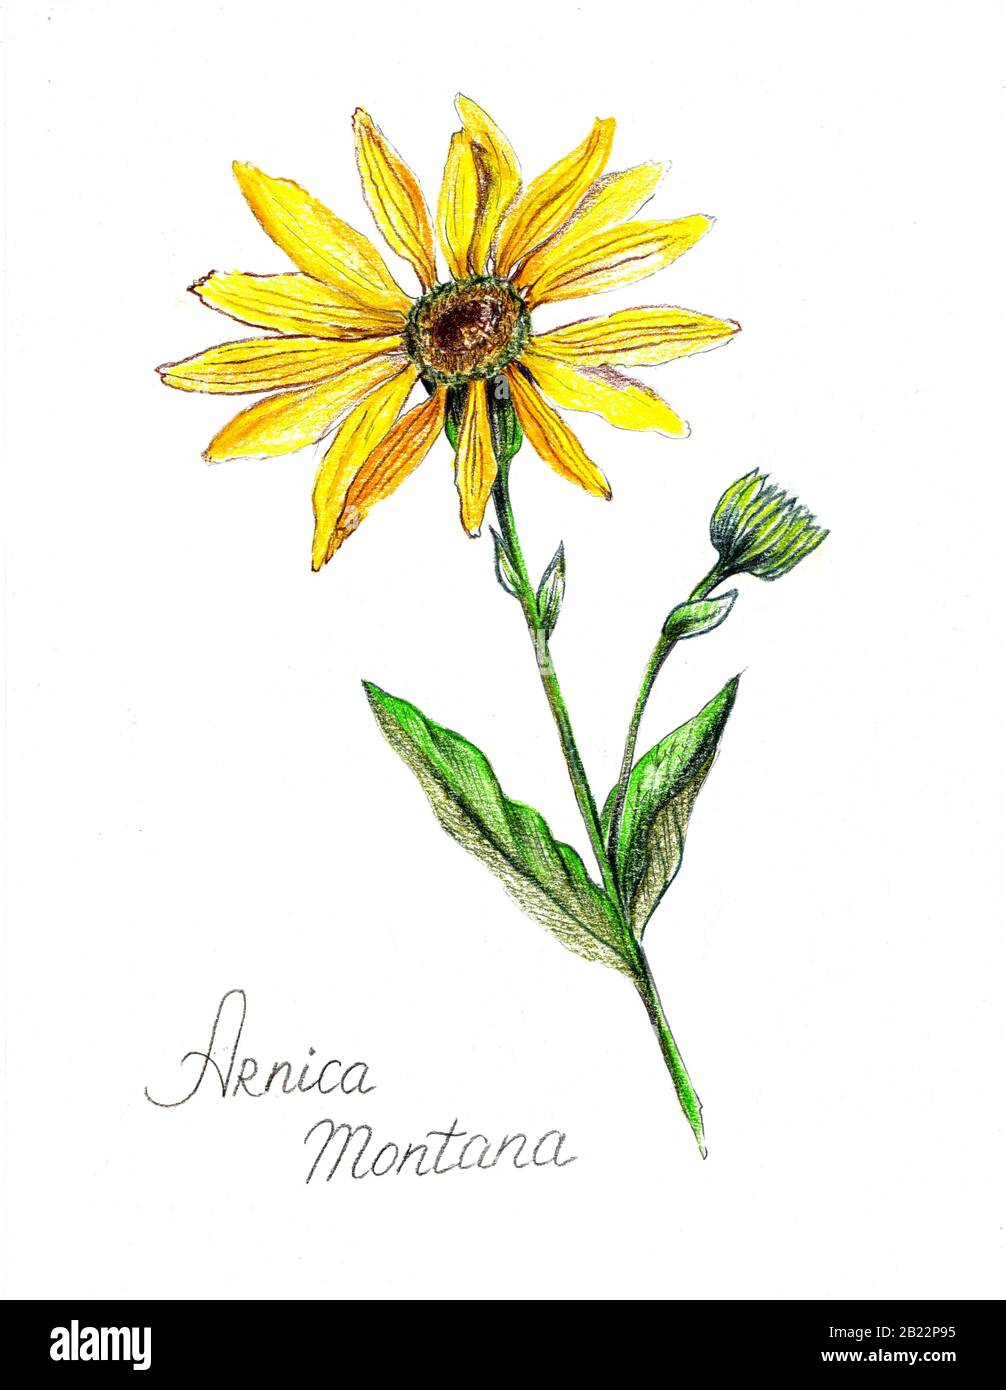 Mountain arnica pencil drawn. Illustration of yellow flower Stock Photo